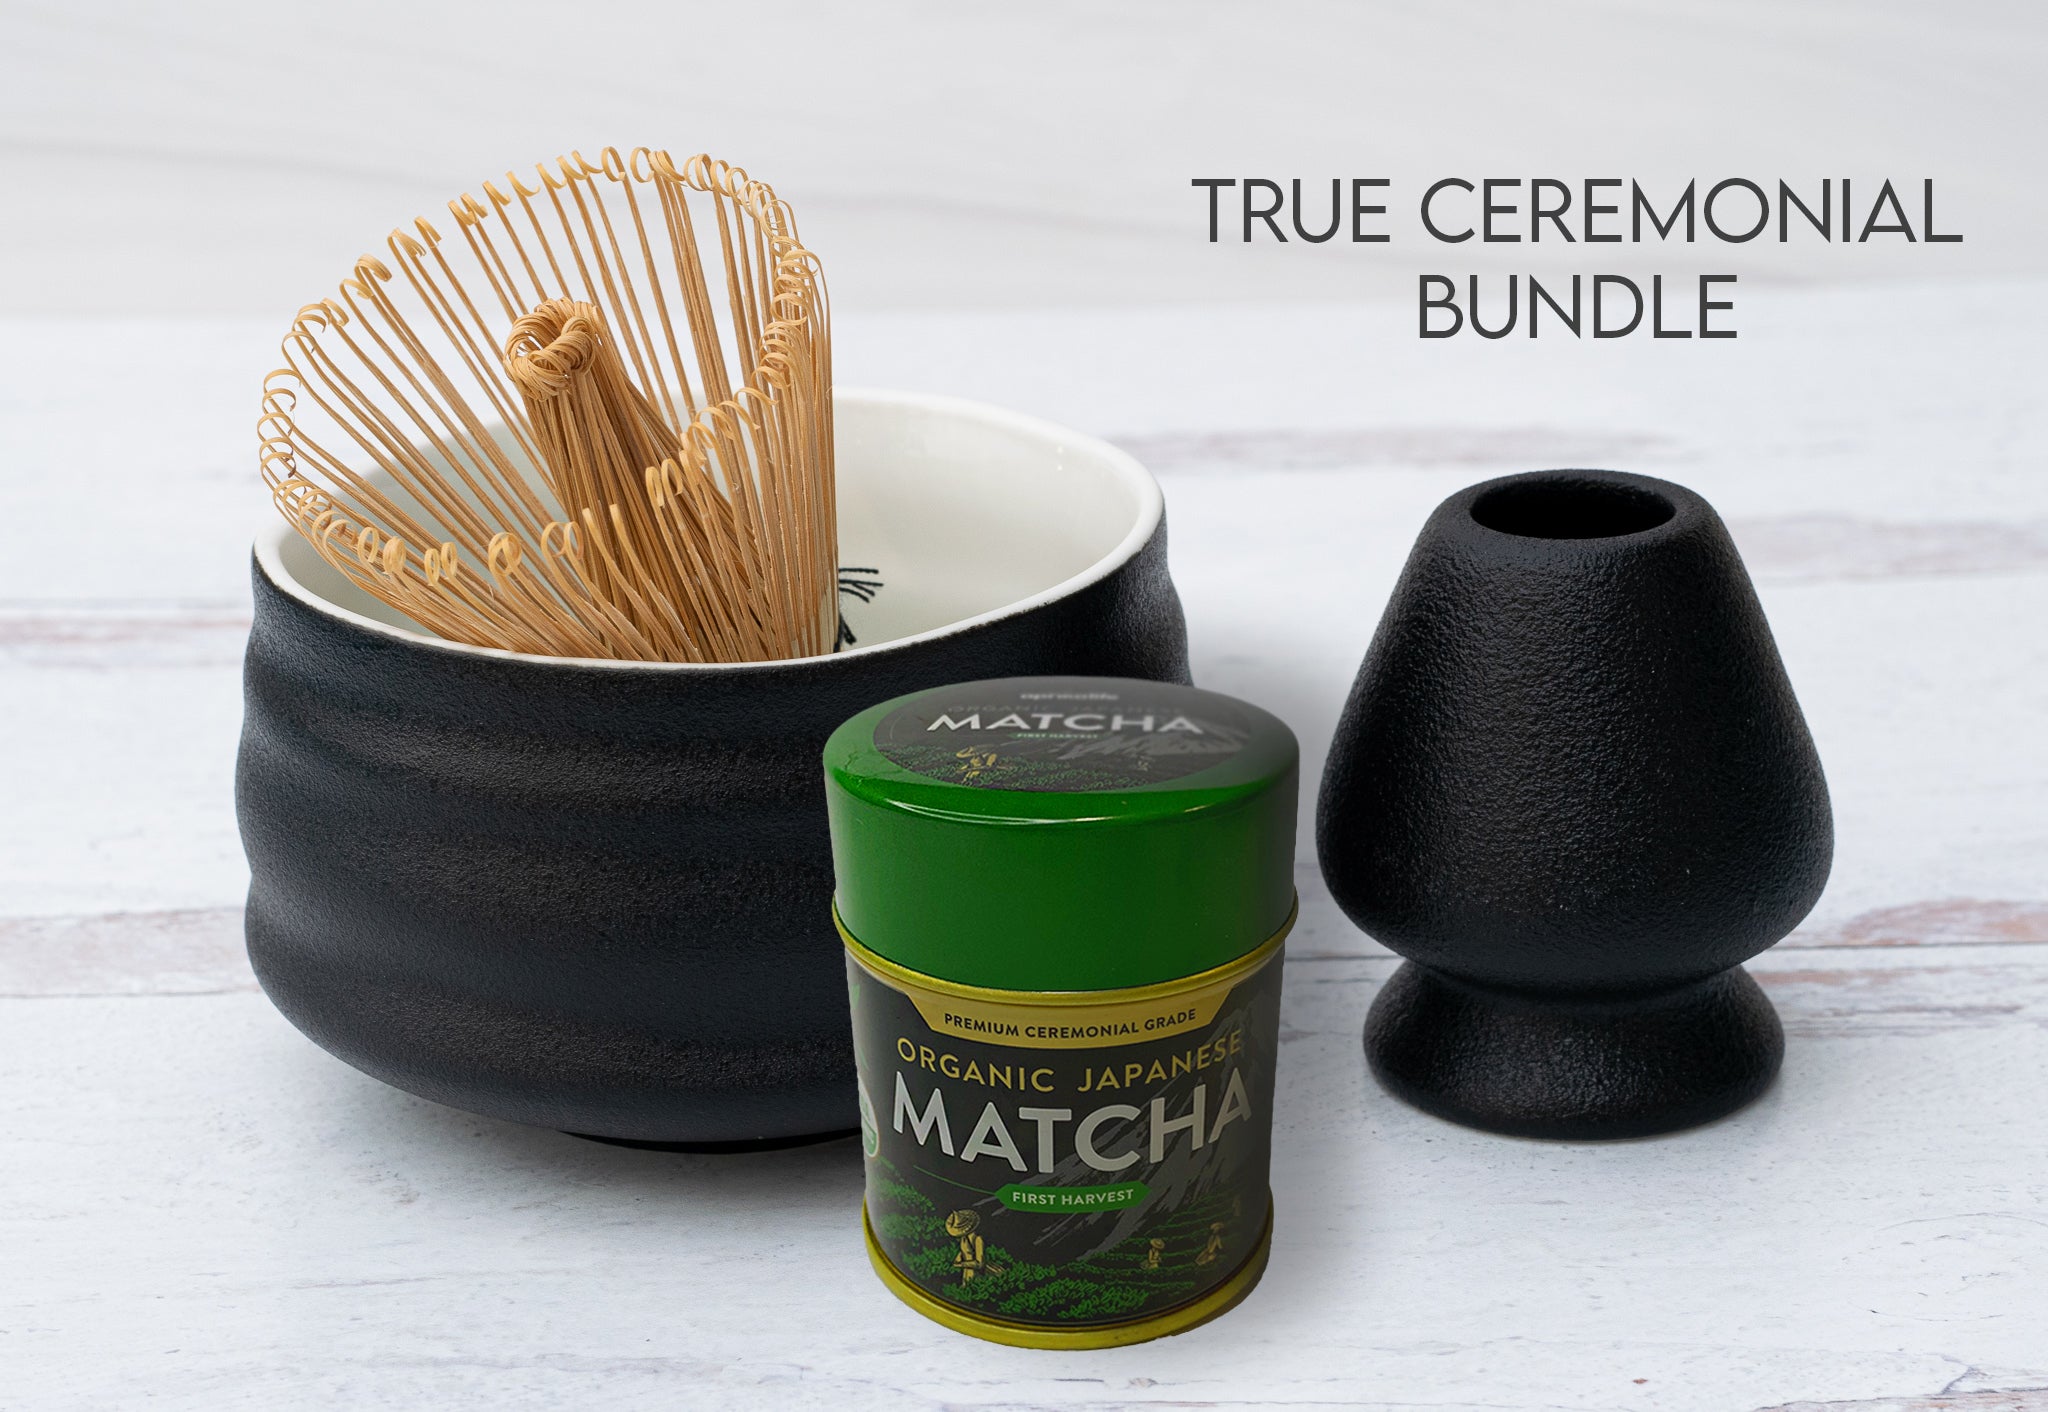 Buy Matcha Green Tea Whisk Set – aprikamatcha – Aprika Life